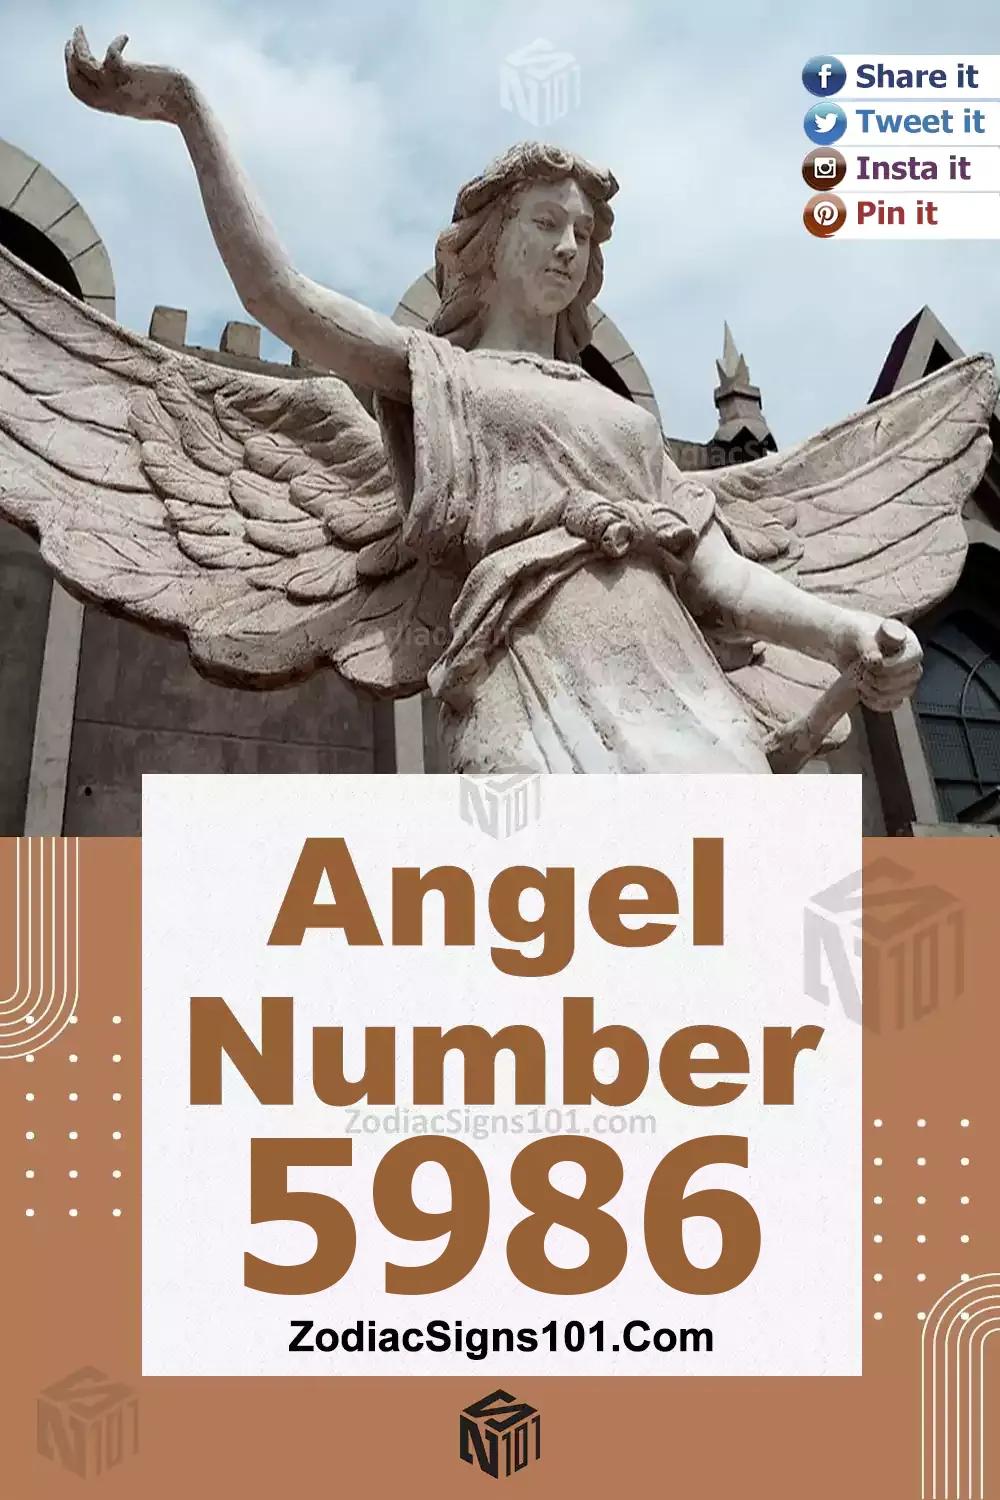 5986-Angel-Number-Meaning.jpg